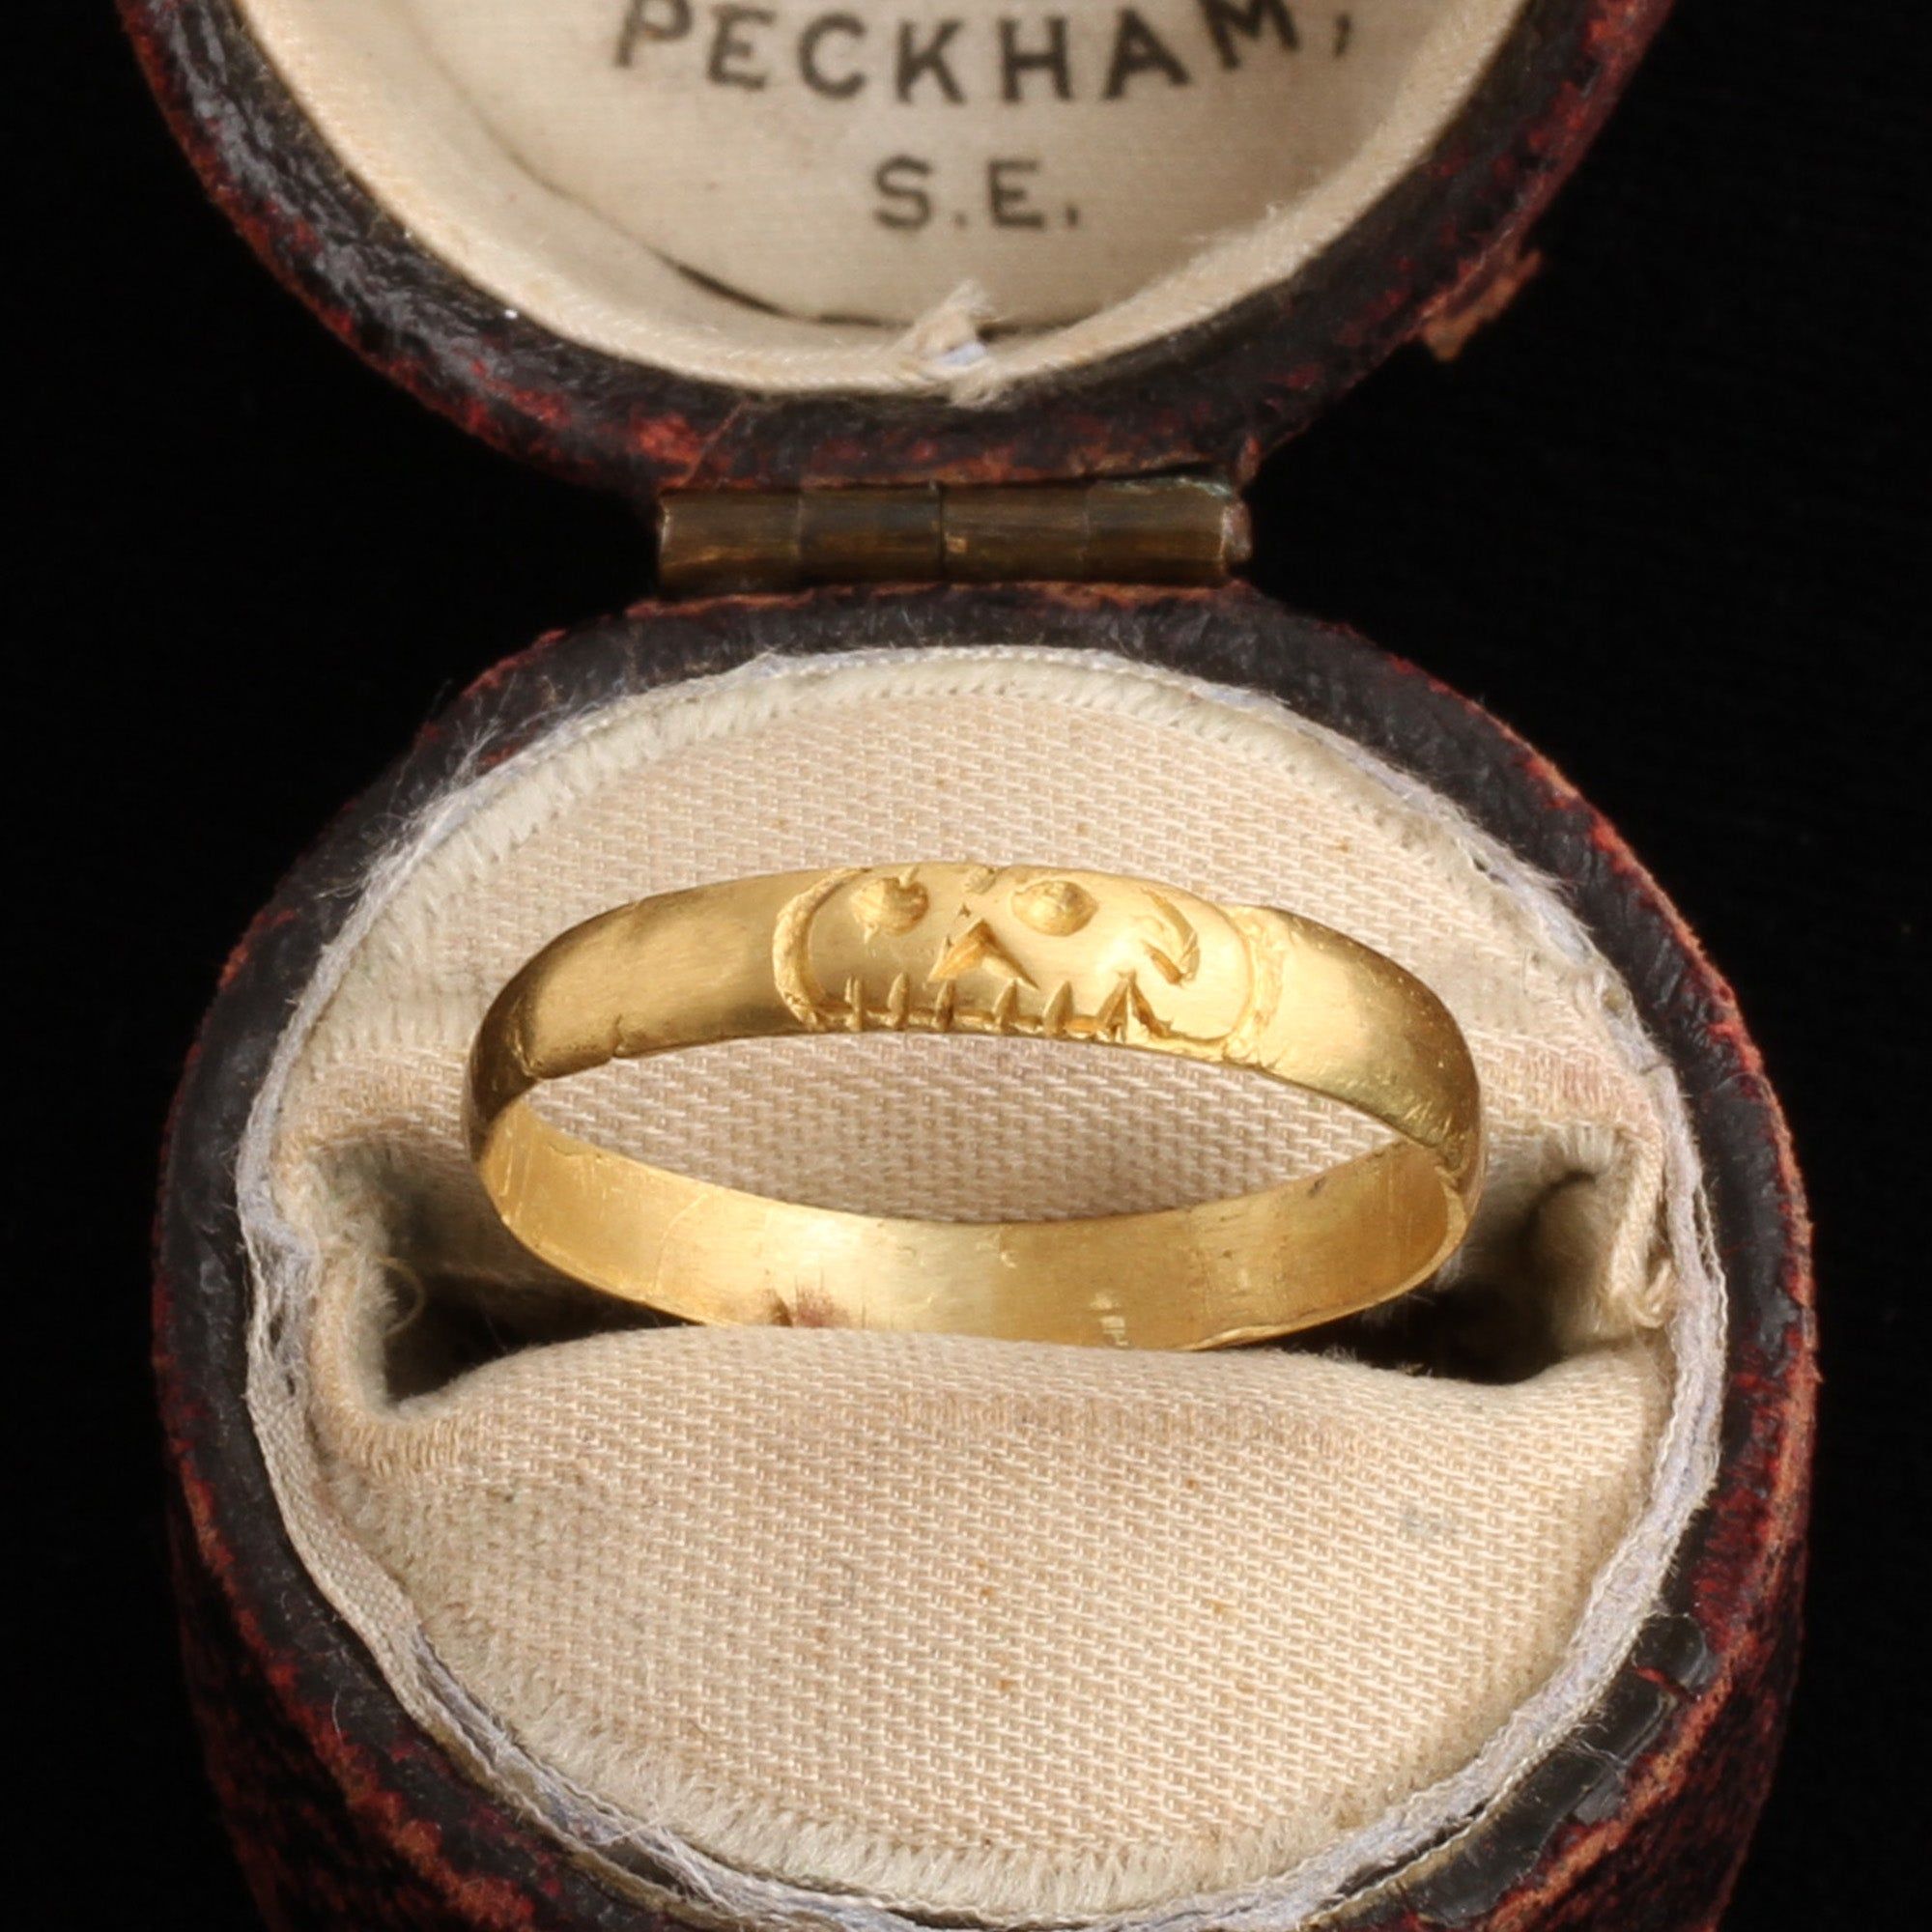 18th Century Death's Head Ring